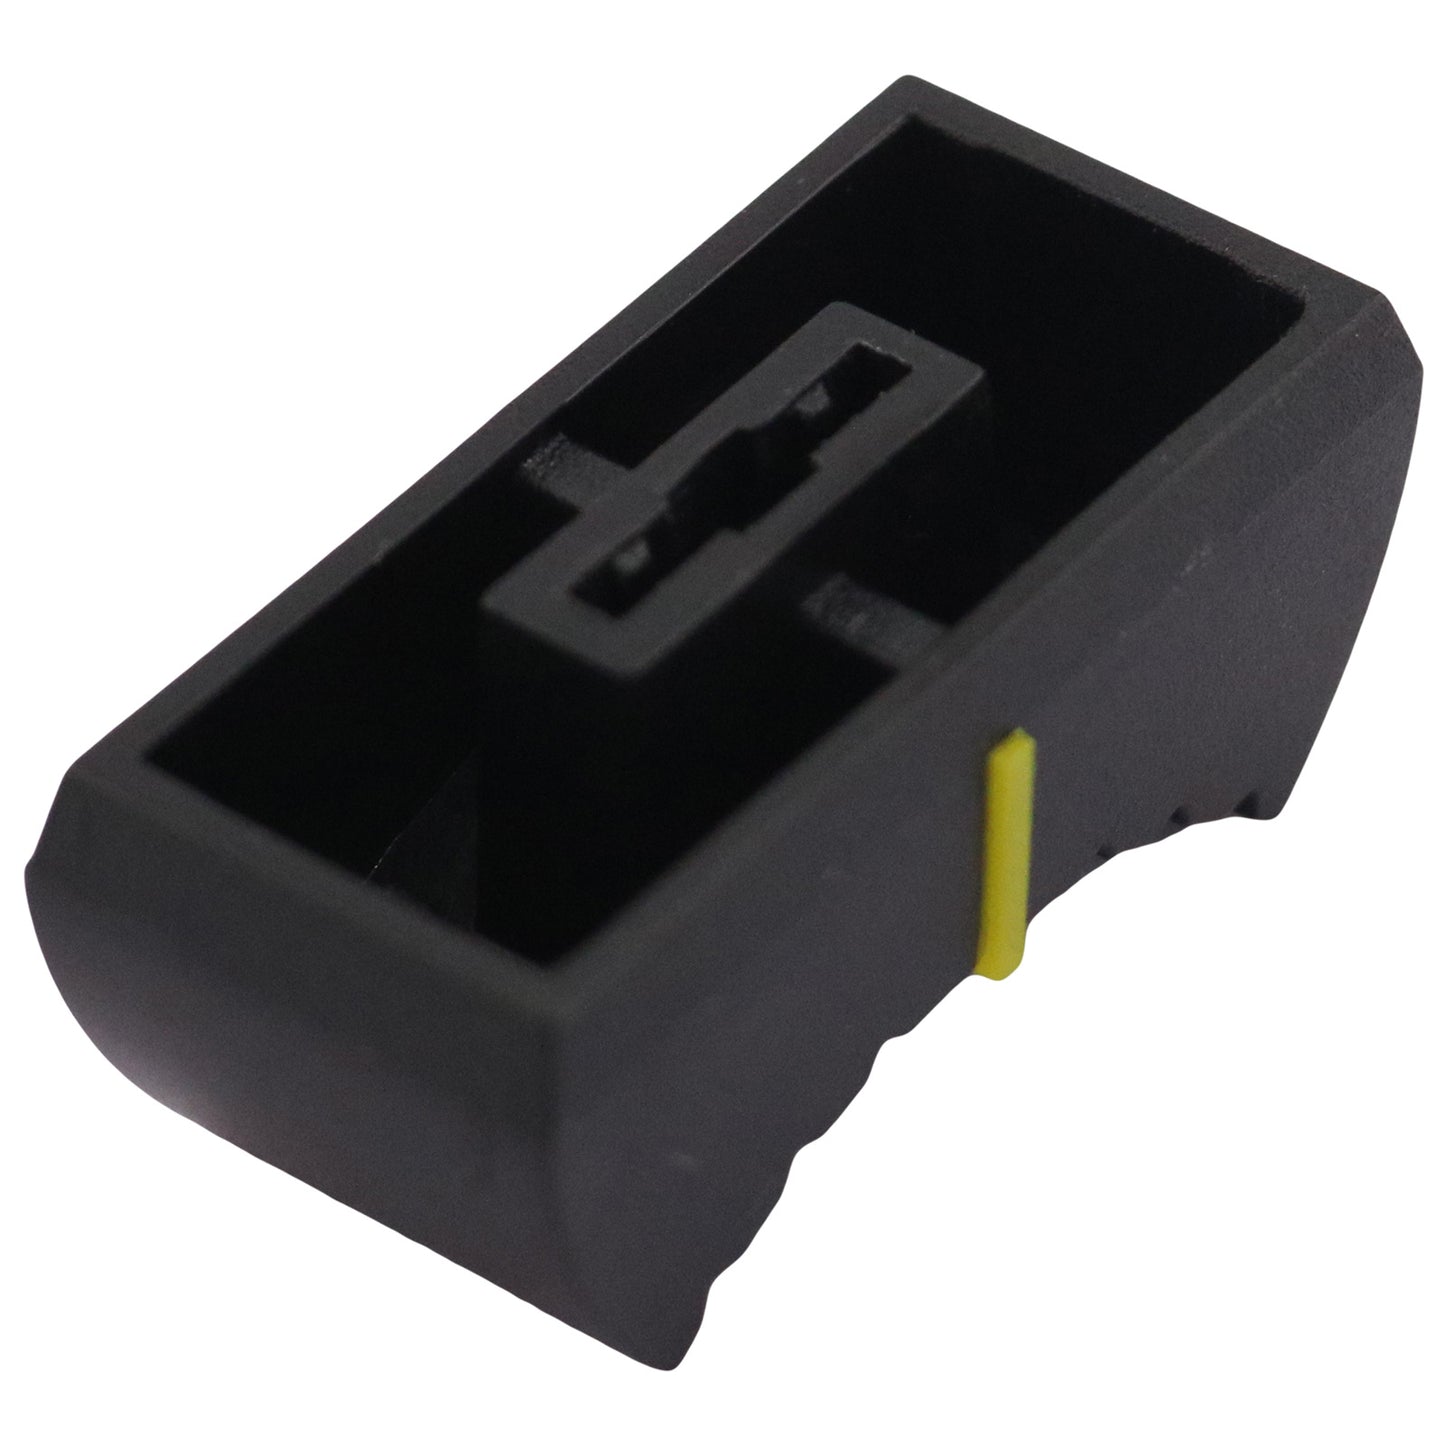 4mm Black Body Linear Slider / Fader Caps